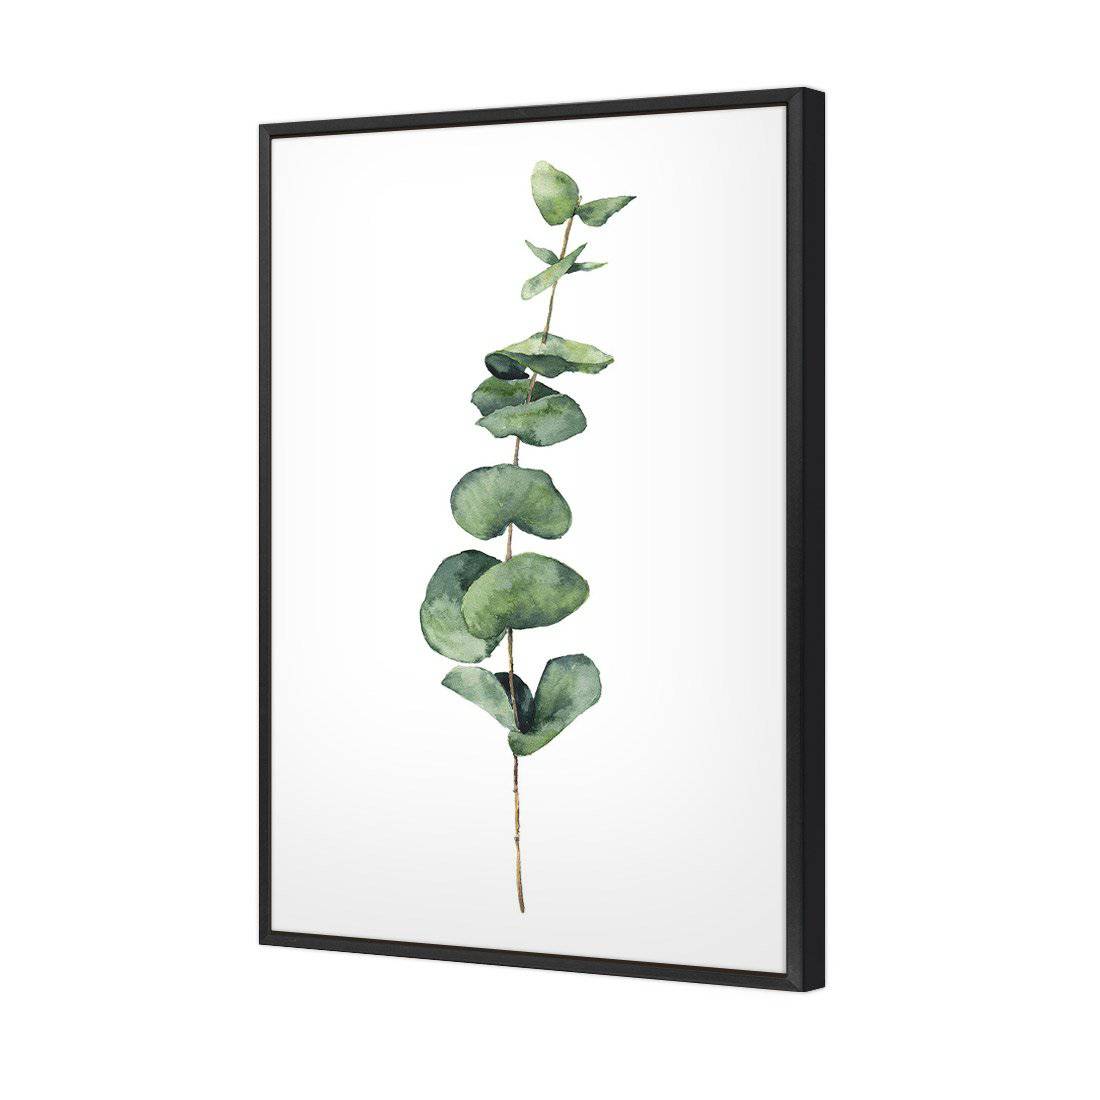 Fragrant Herb 2 Canvas Art-Canvas-Wall Art Designs-45x30cm-Canvas - Black Frame-Wall Art Designs